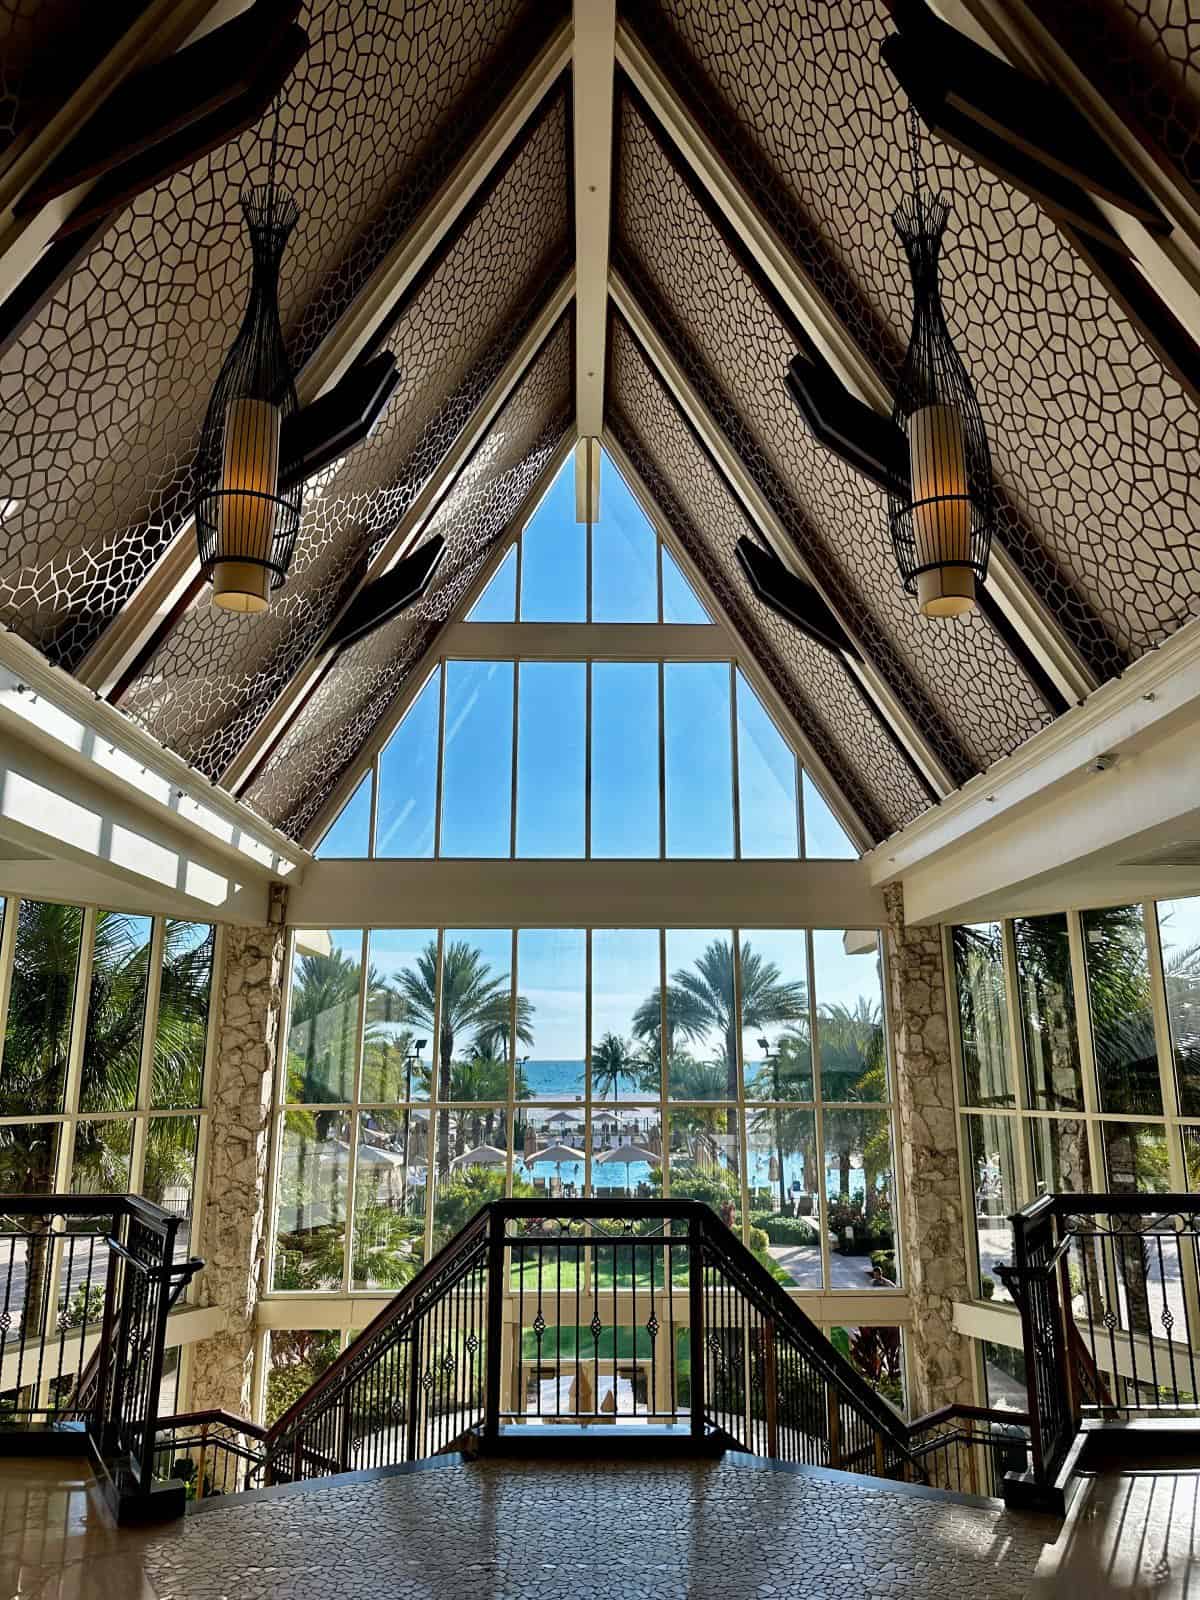 The lobby at the JW Marriott Marco Island beach resort